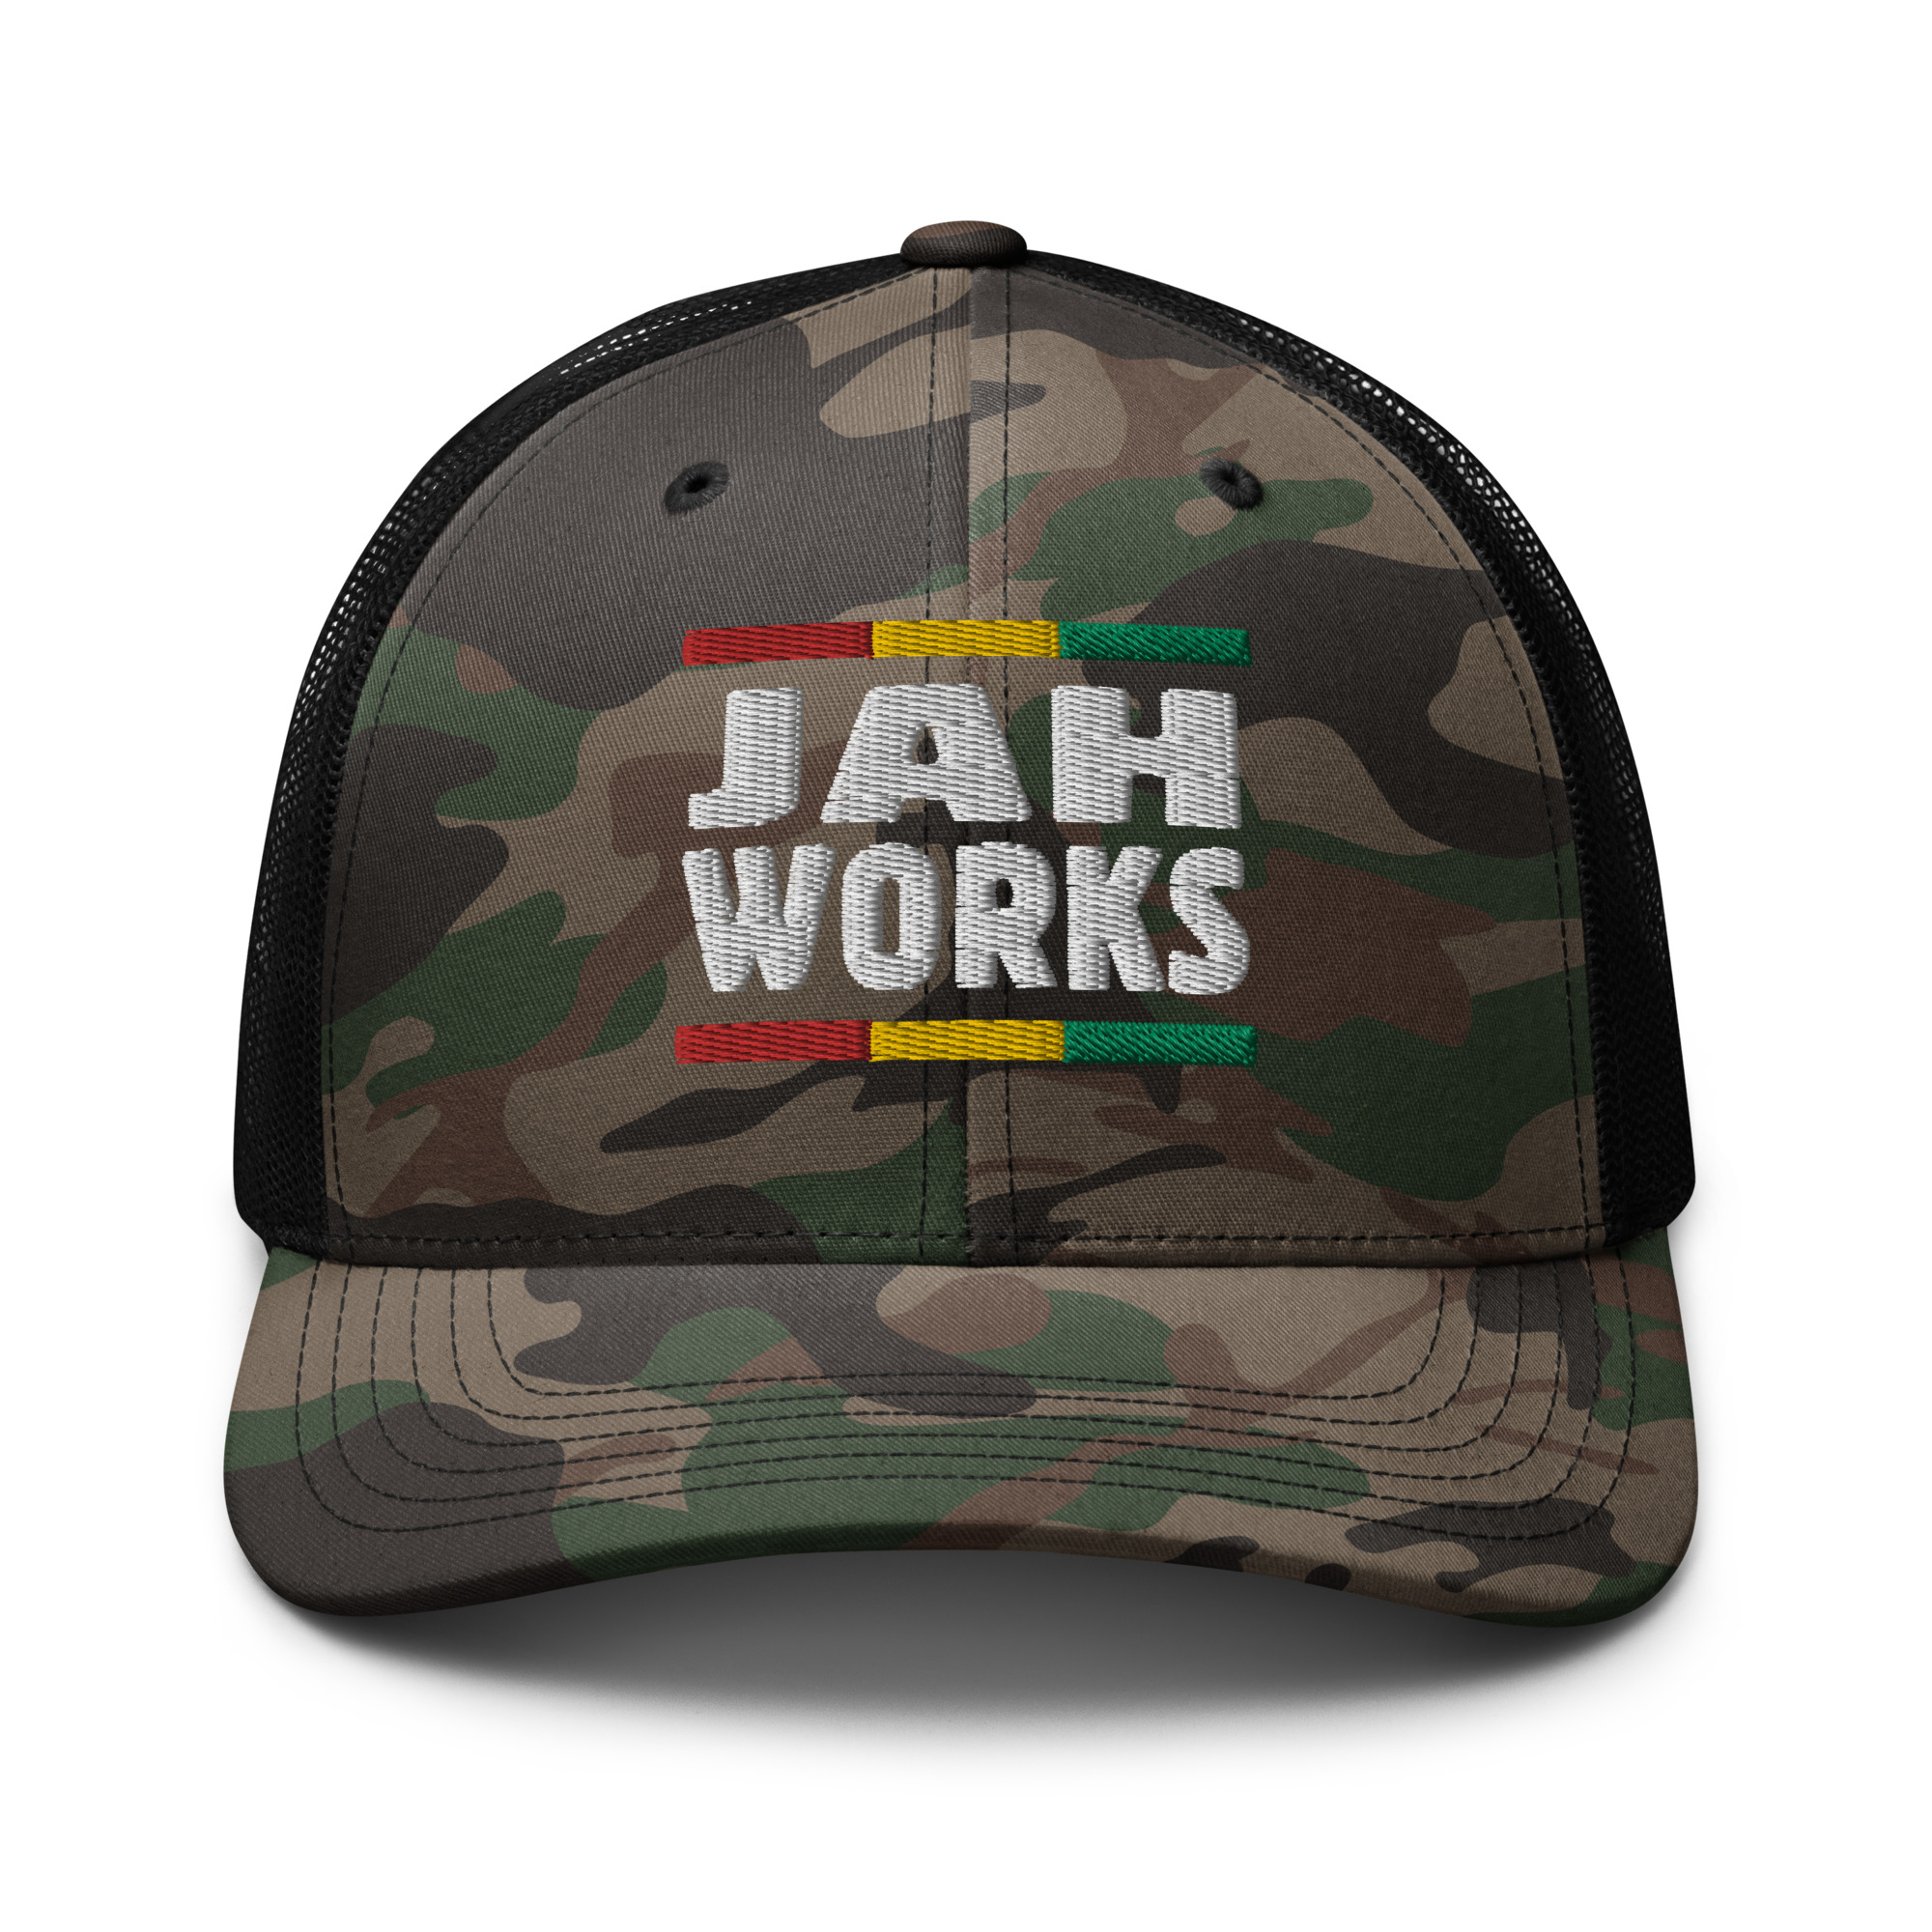 Jah Works camouflage truckerpet